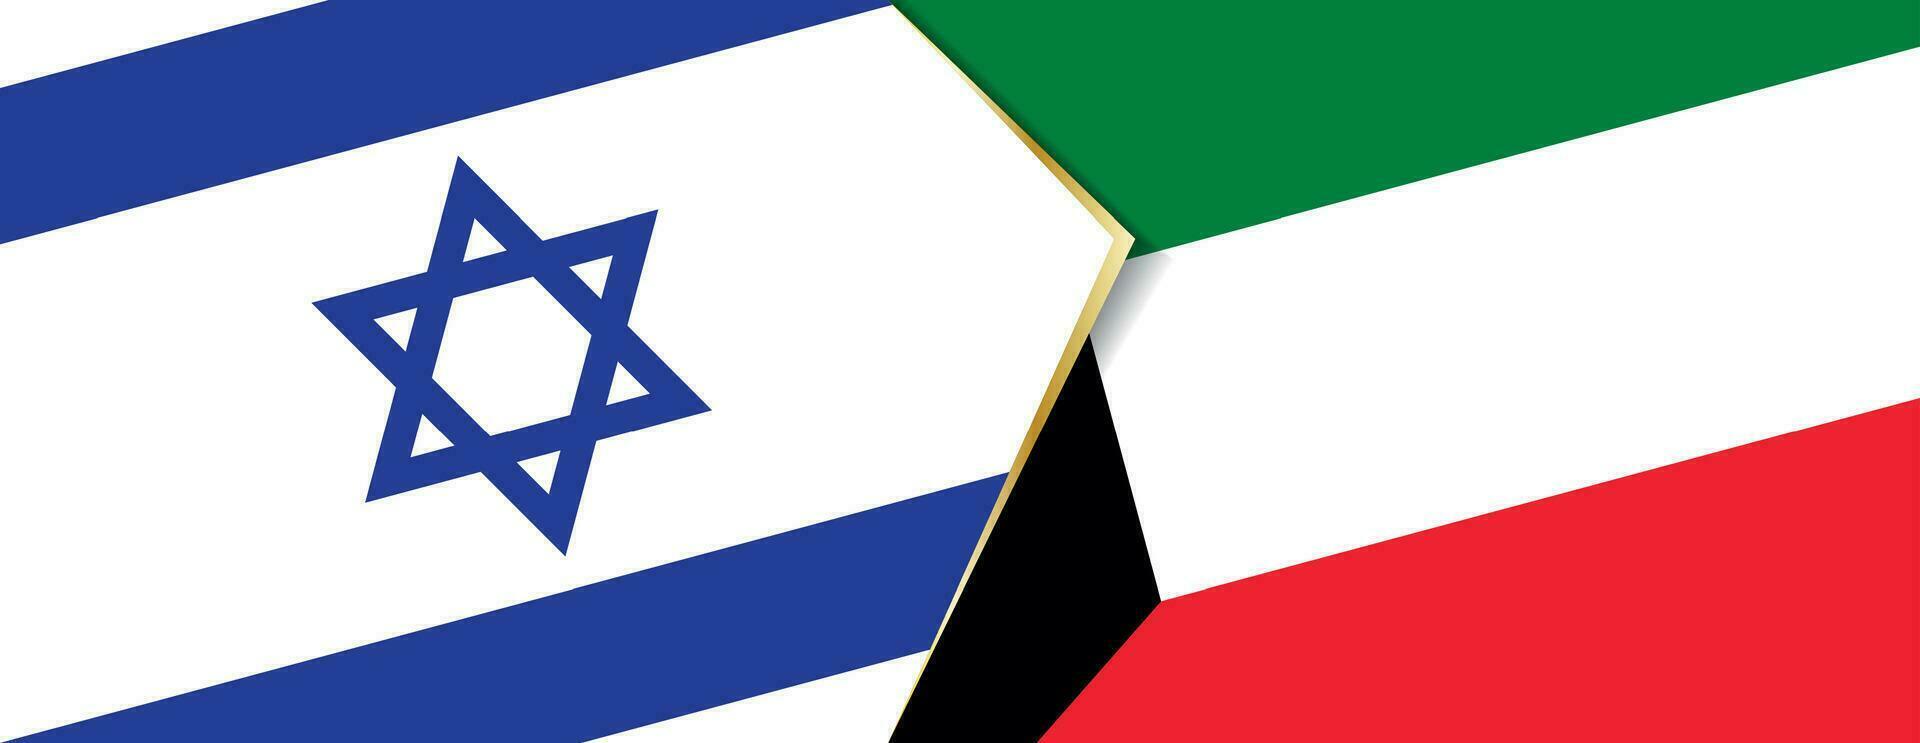 Israele e Kuwait bandiere, Due vettore bandiere.